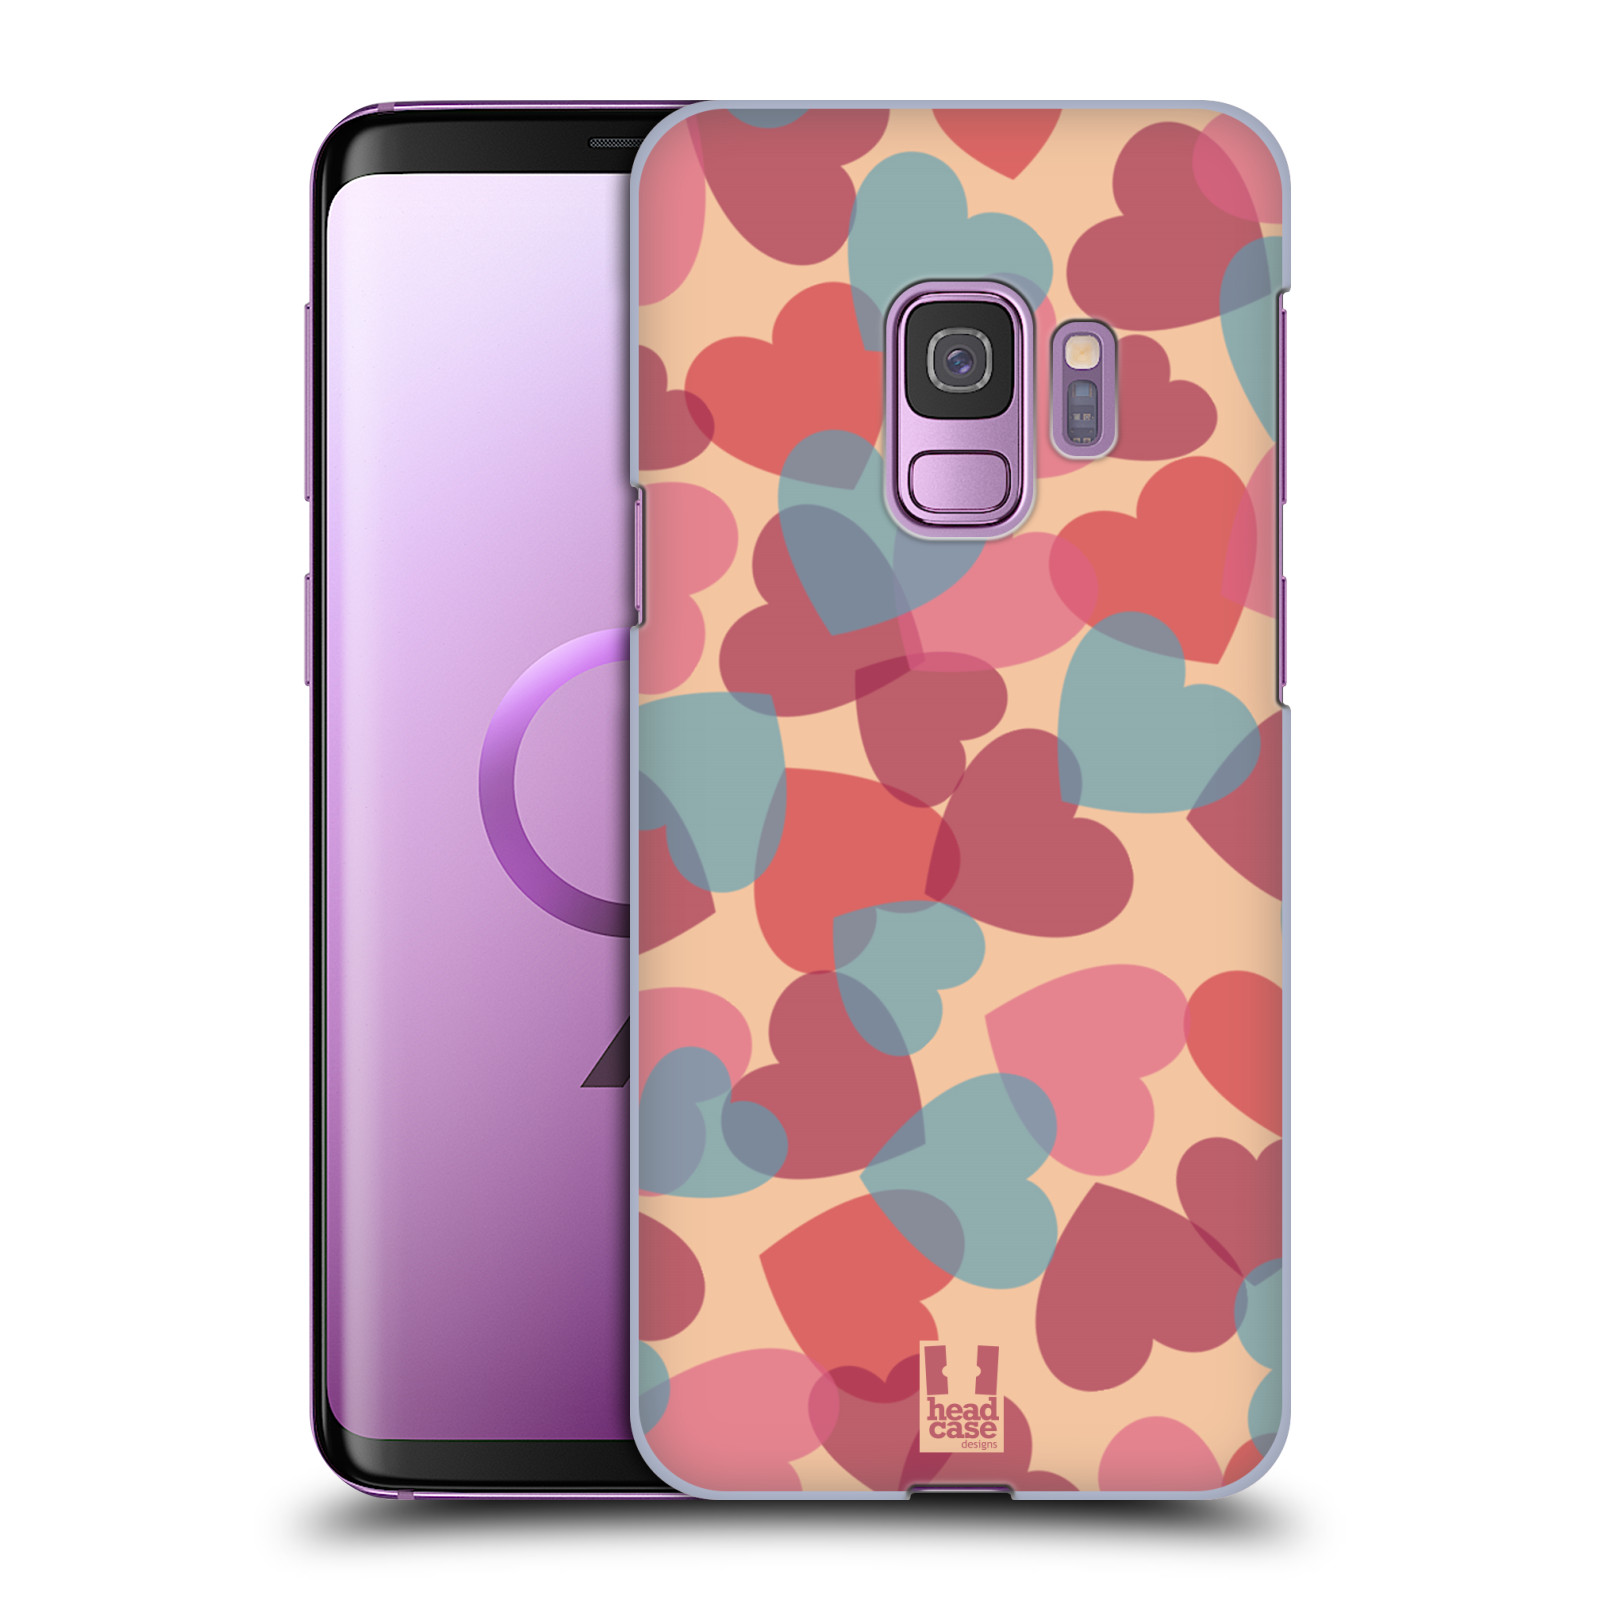 Zadní obal pro mobil Samsung Galaxy S9 - HEAD CASE - Růžová srdíčka kreslený vzor